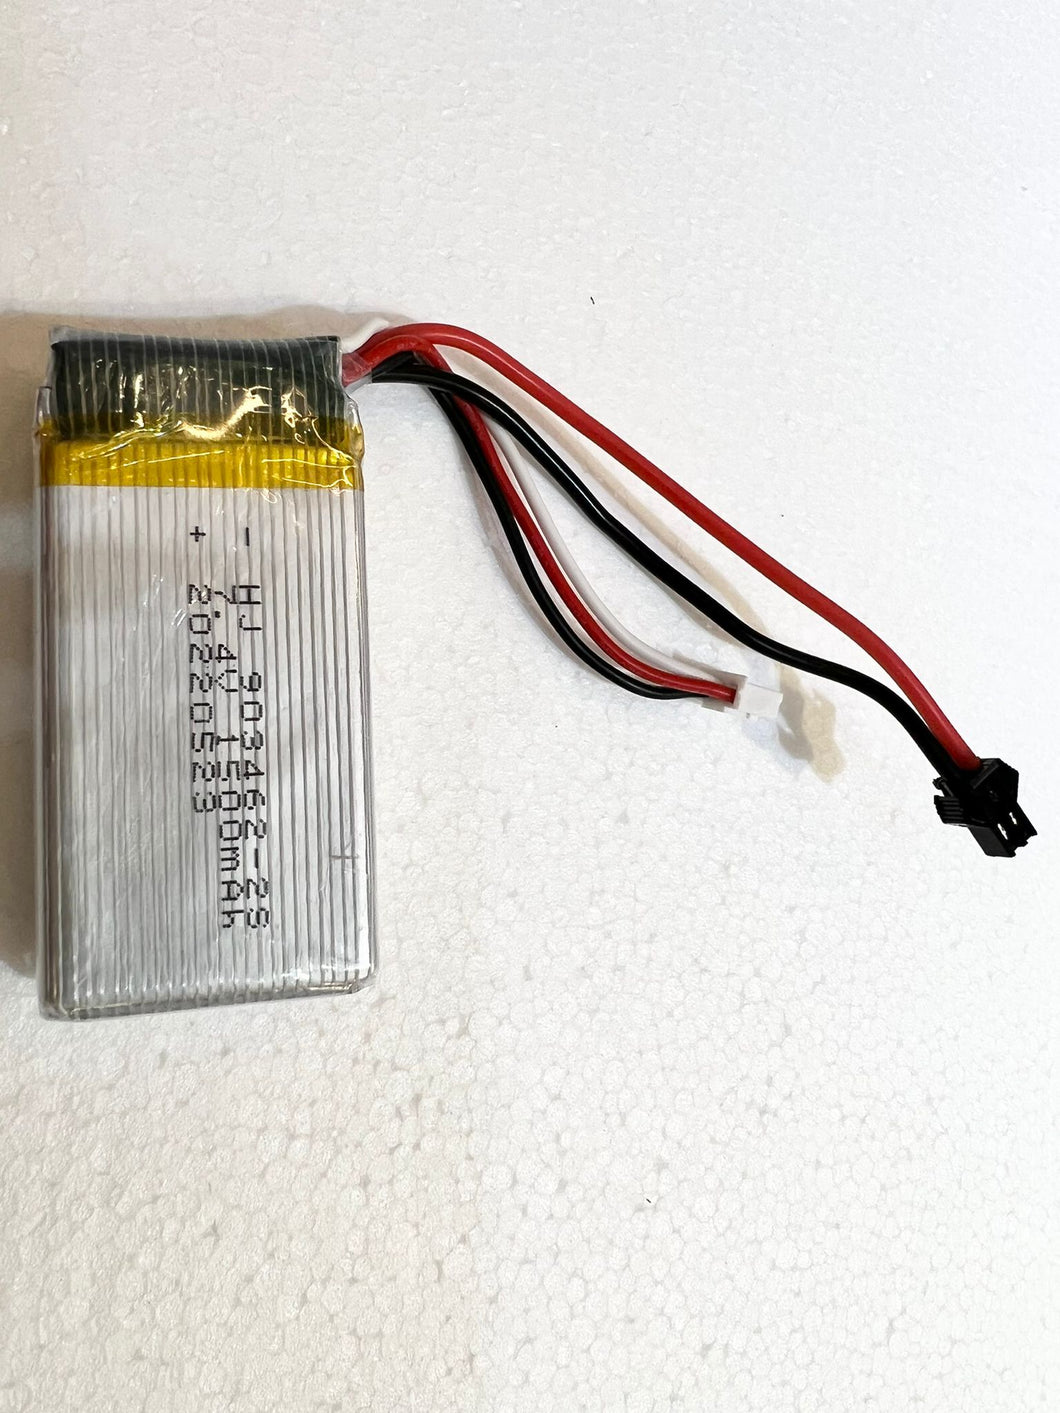 7.4V 1500mah Lipo Battery black connector D